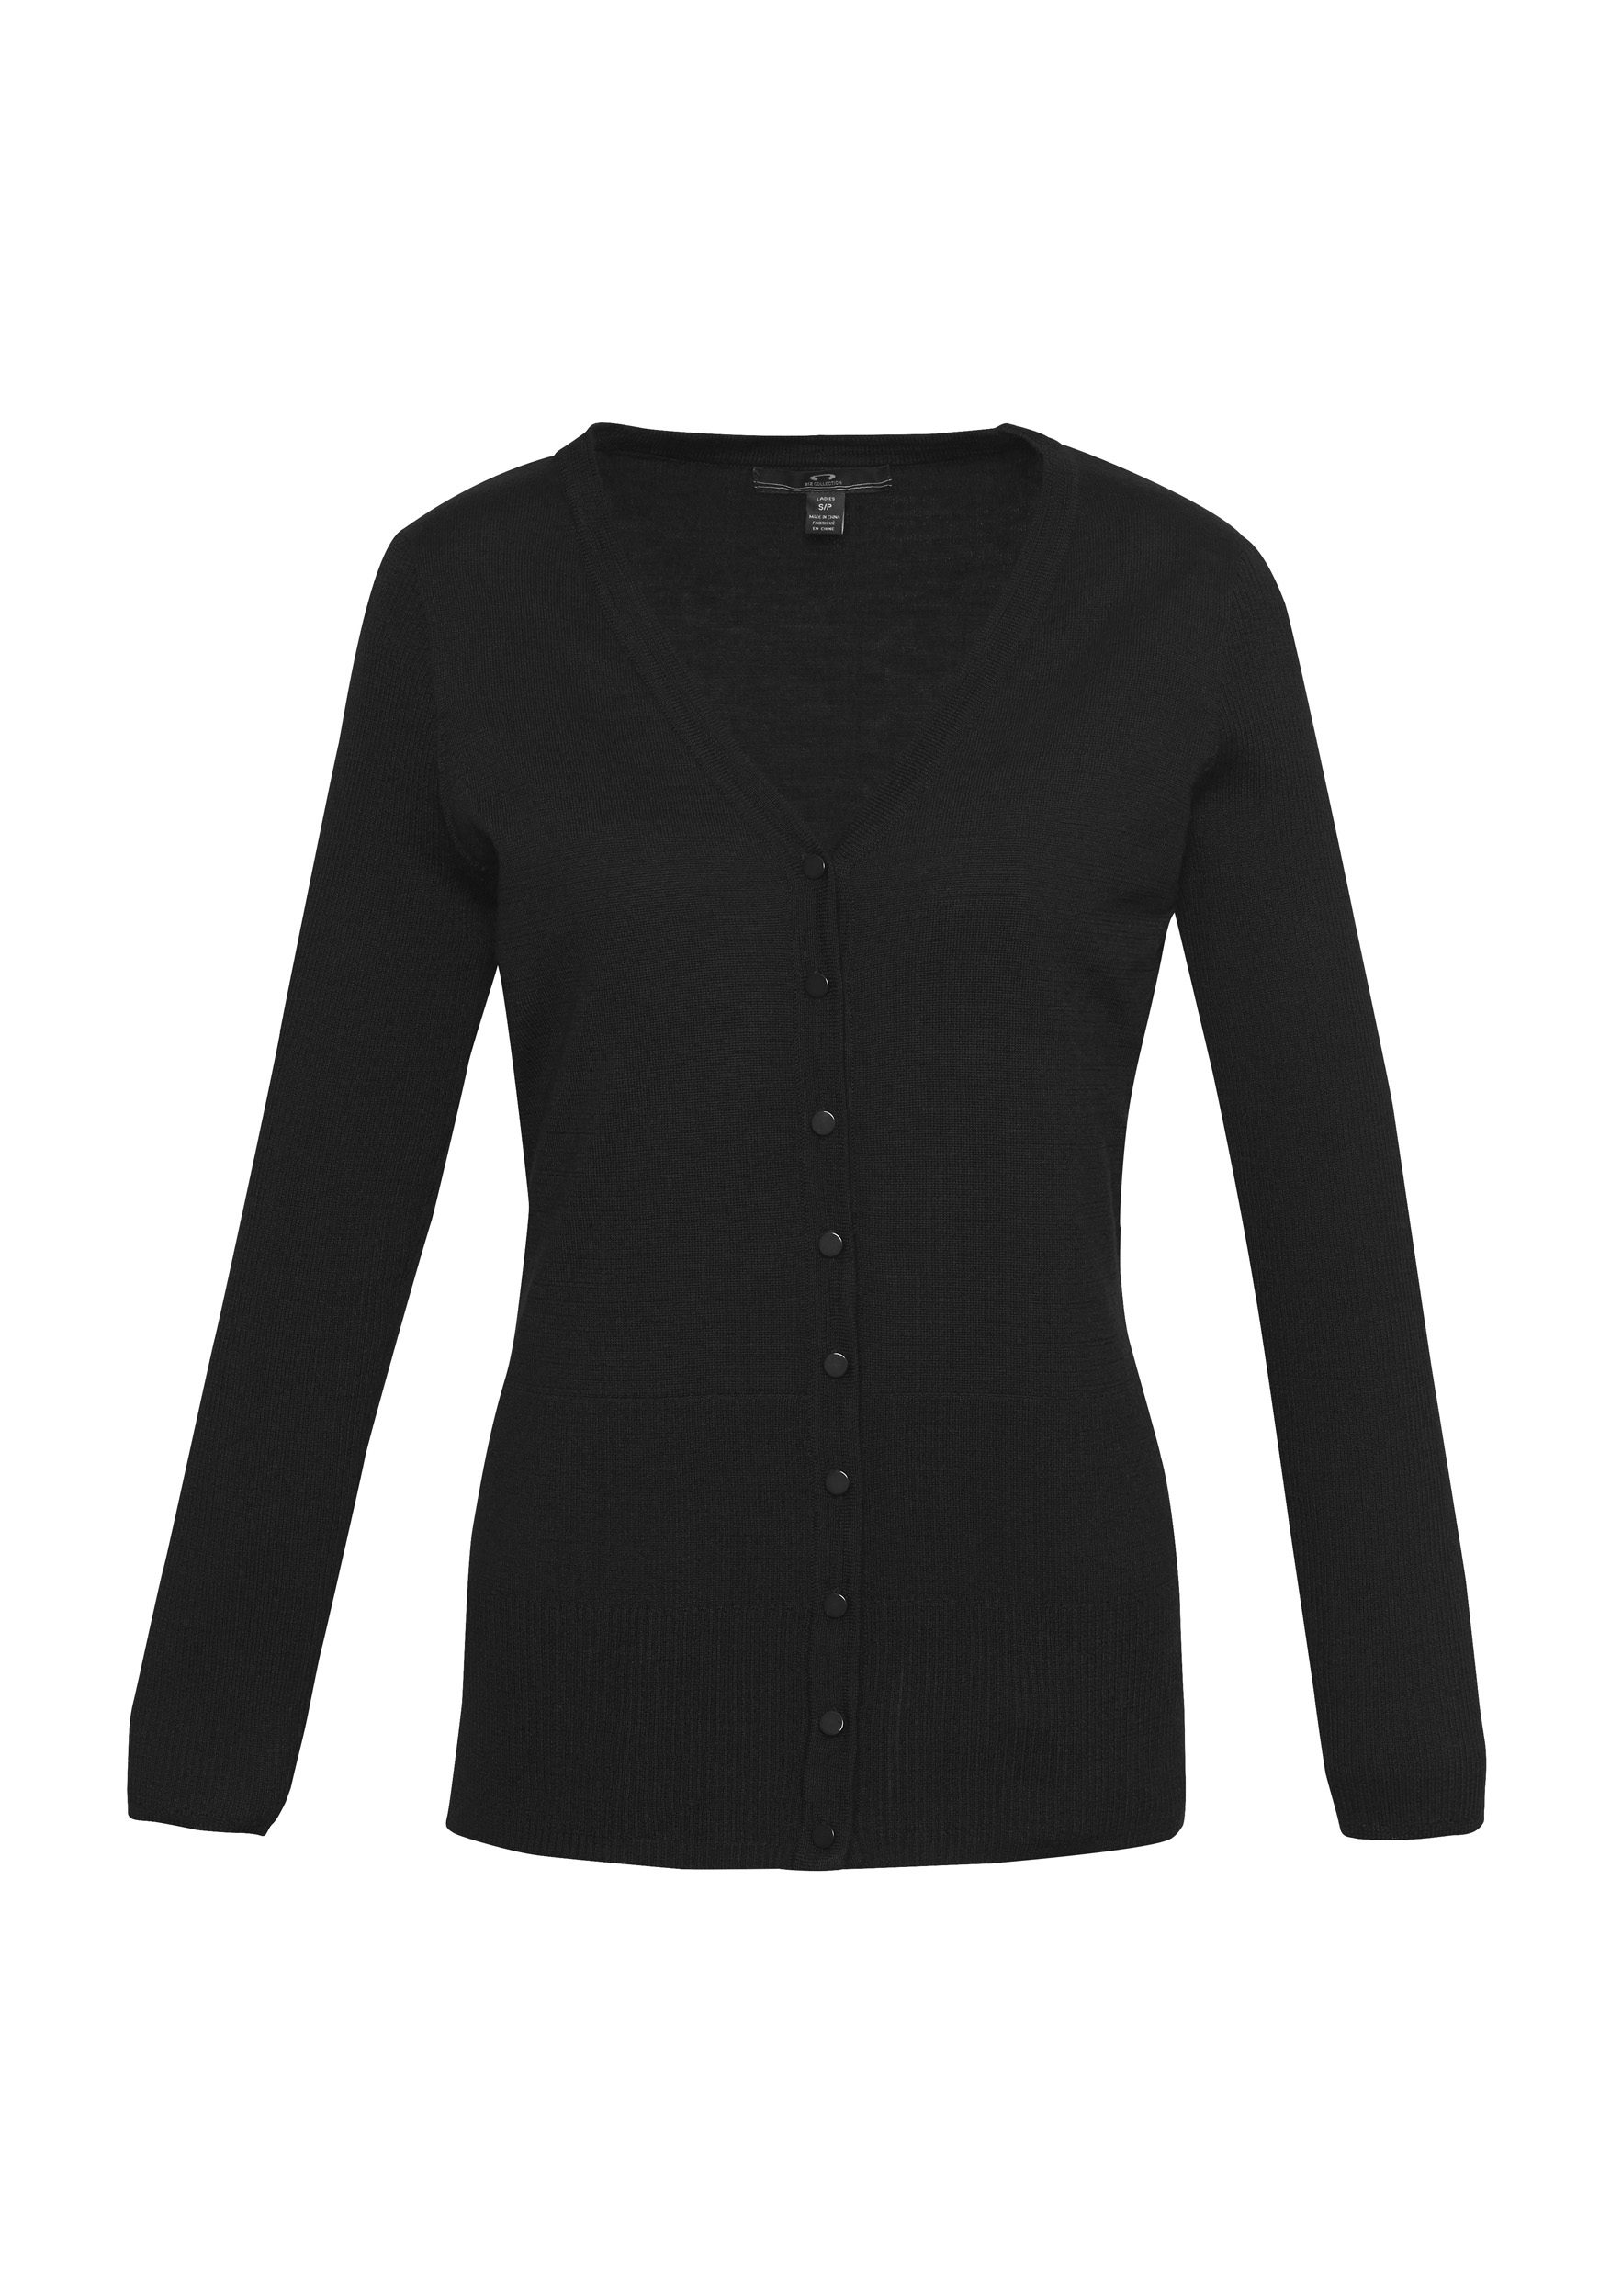 Biz Collection Ladies Milano Cardigan #LC417L Black